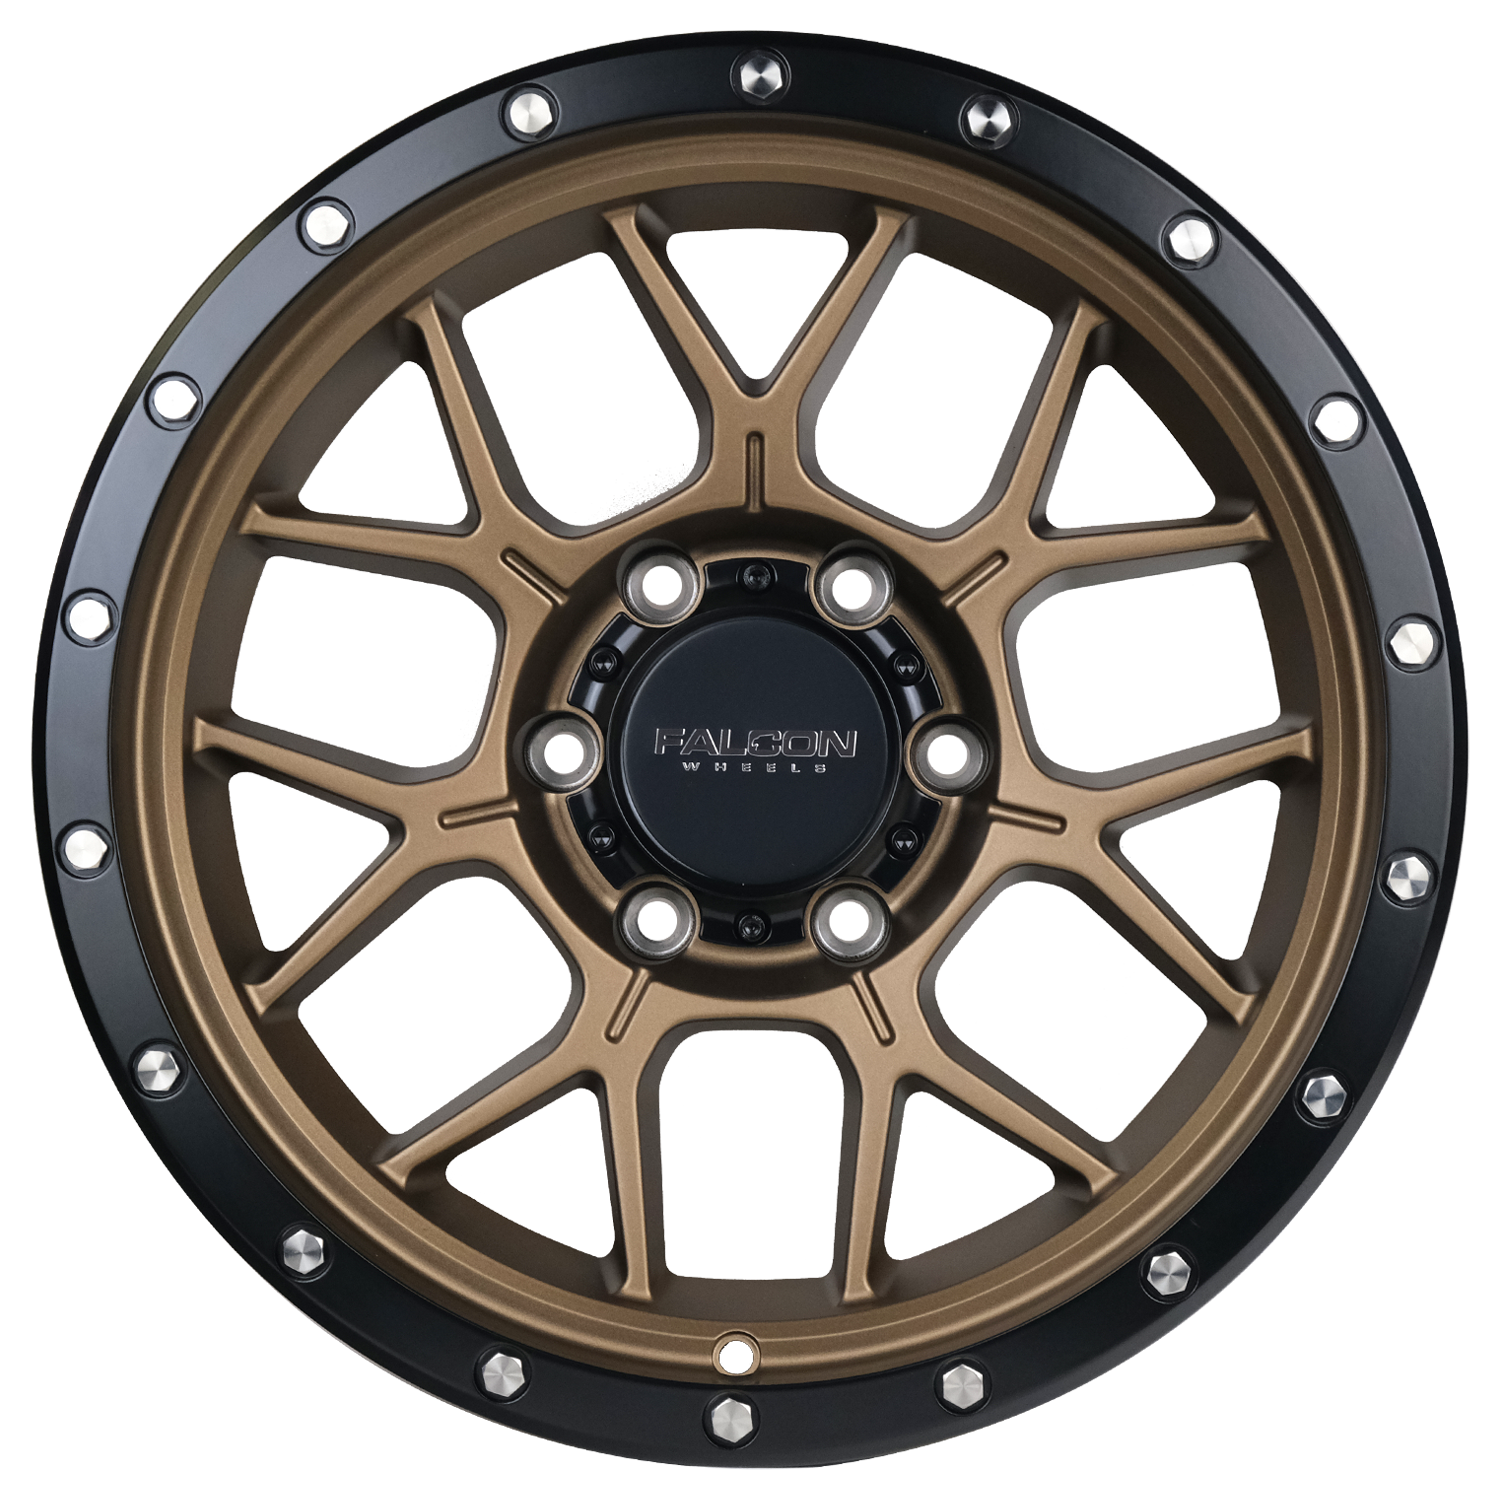 TX - Titan Matte Bronze - Premium Wheels from Falcon Off-Road Wheels - Just $310! Shop now at Falcon Off-Road Wheels 